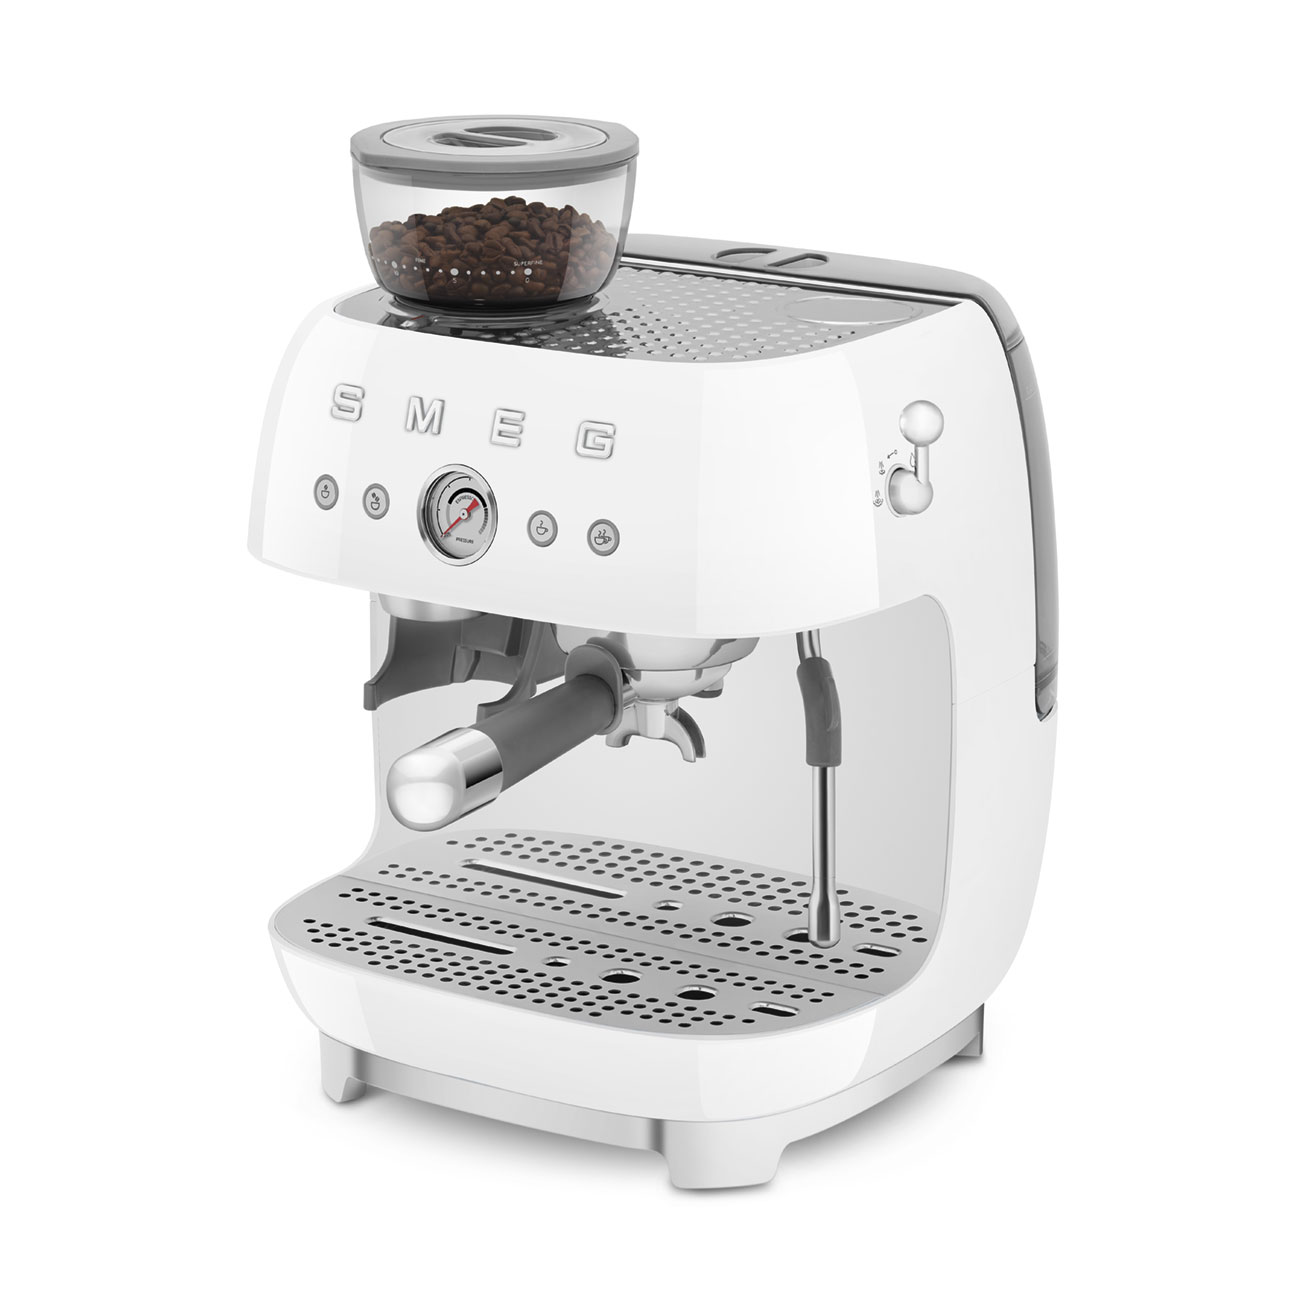 Smeg White Espresso Manual Coffee Machine with Grinder_9